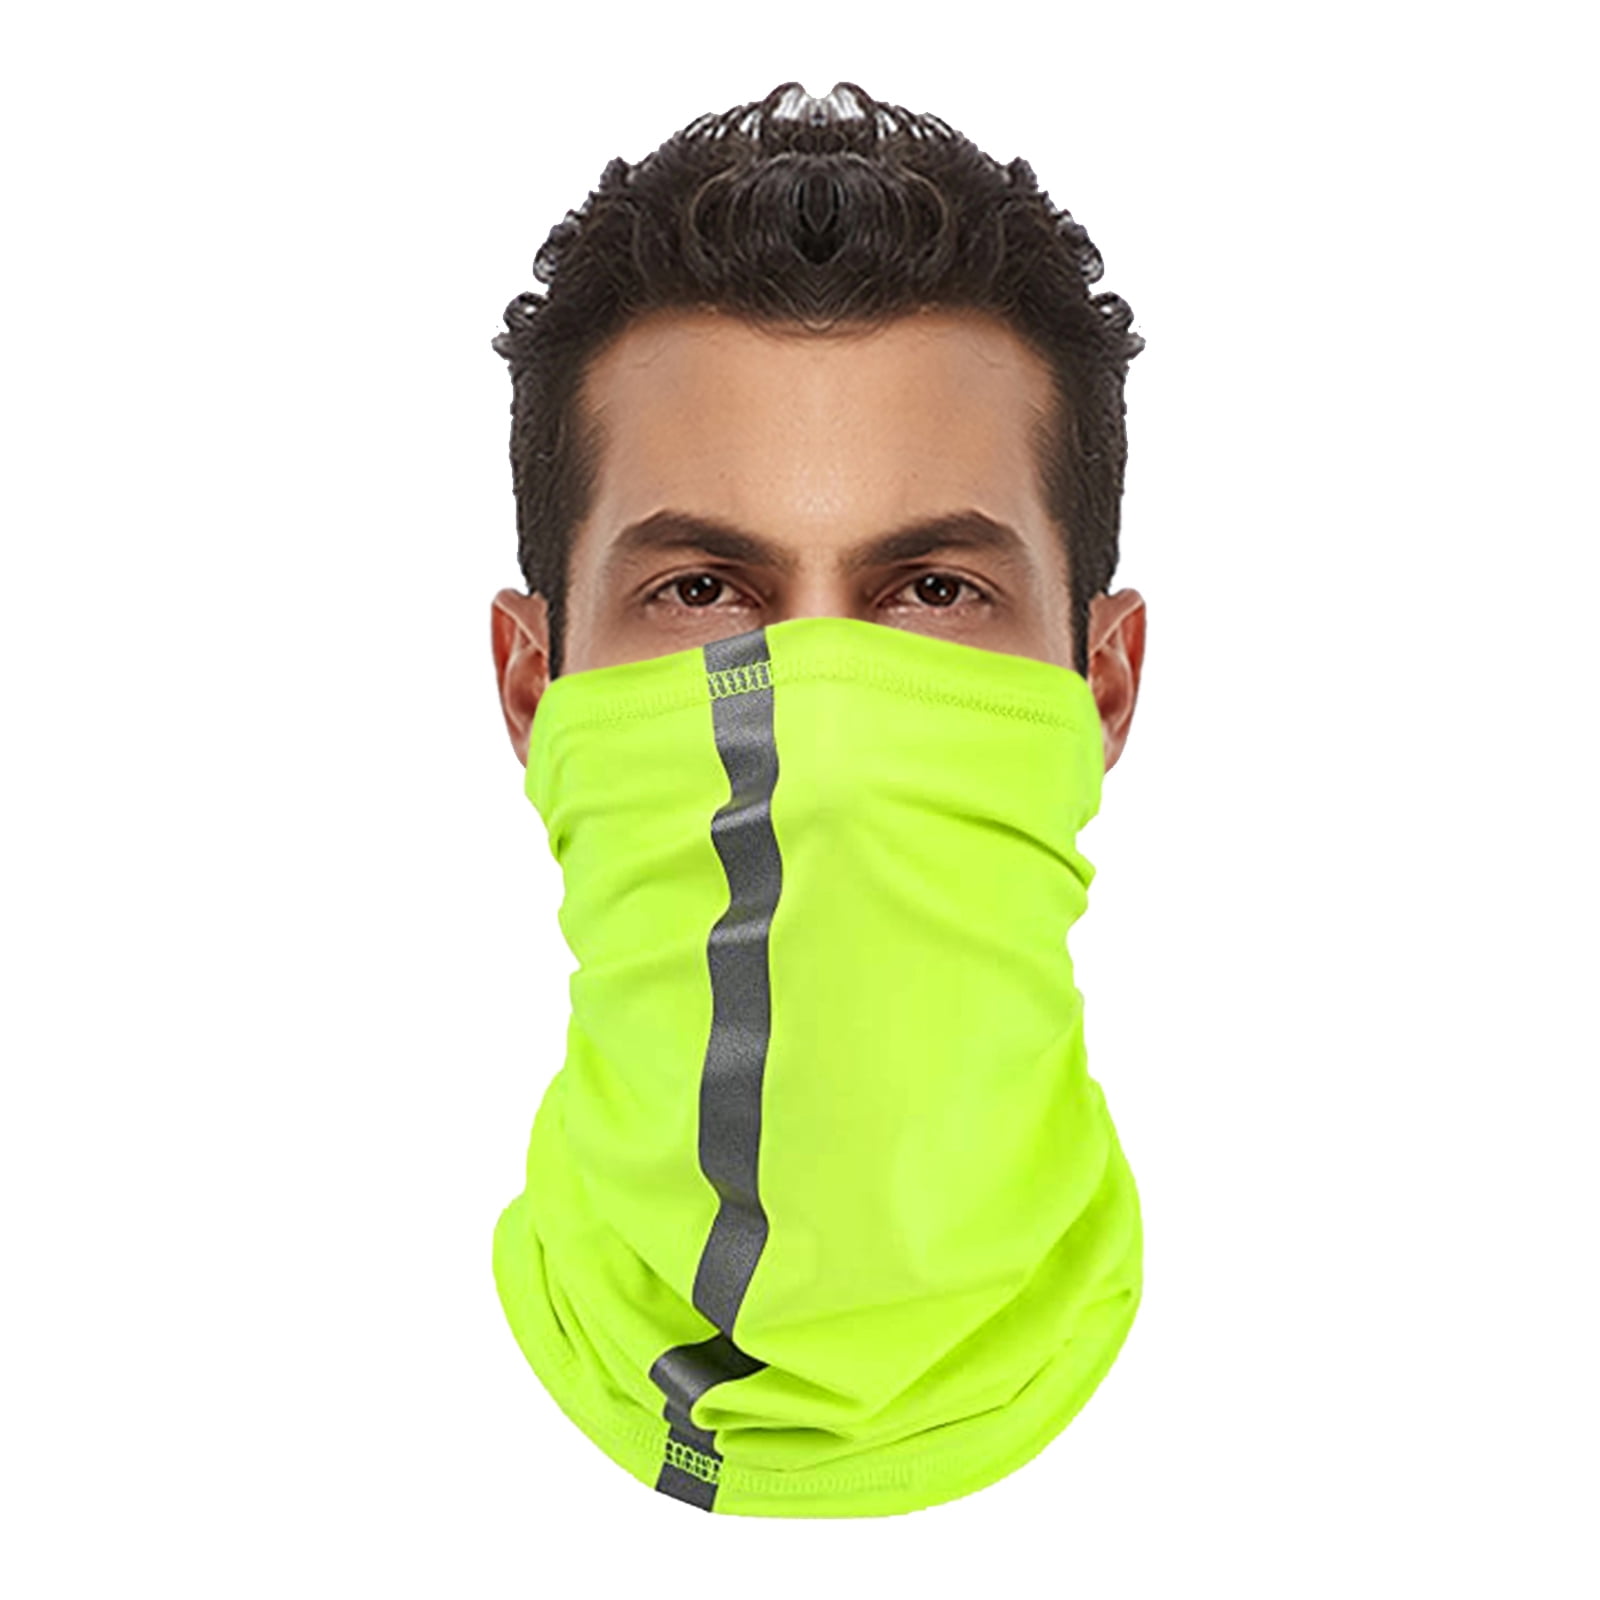 Muka Reflective Stripe Face Scarves Neckerchief Outdoor Bandana for Working-Yellow Neck Activity Mask Safety Gaiter